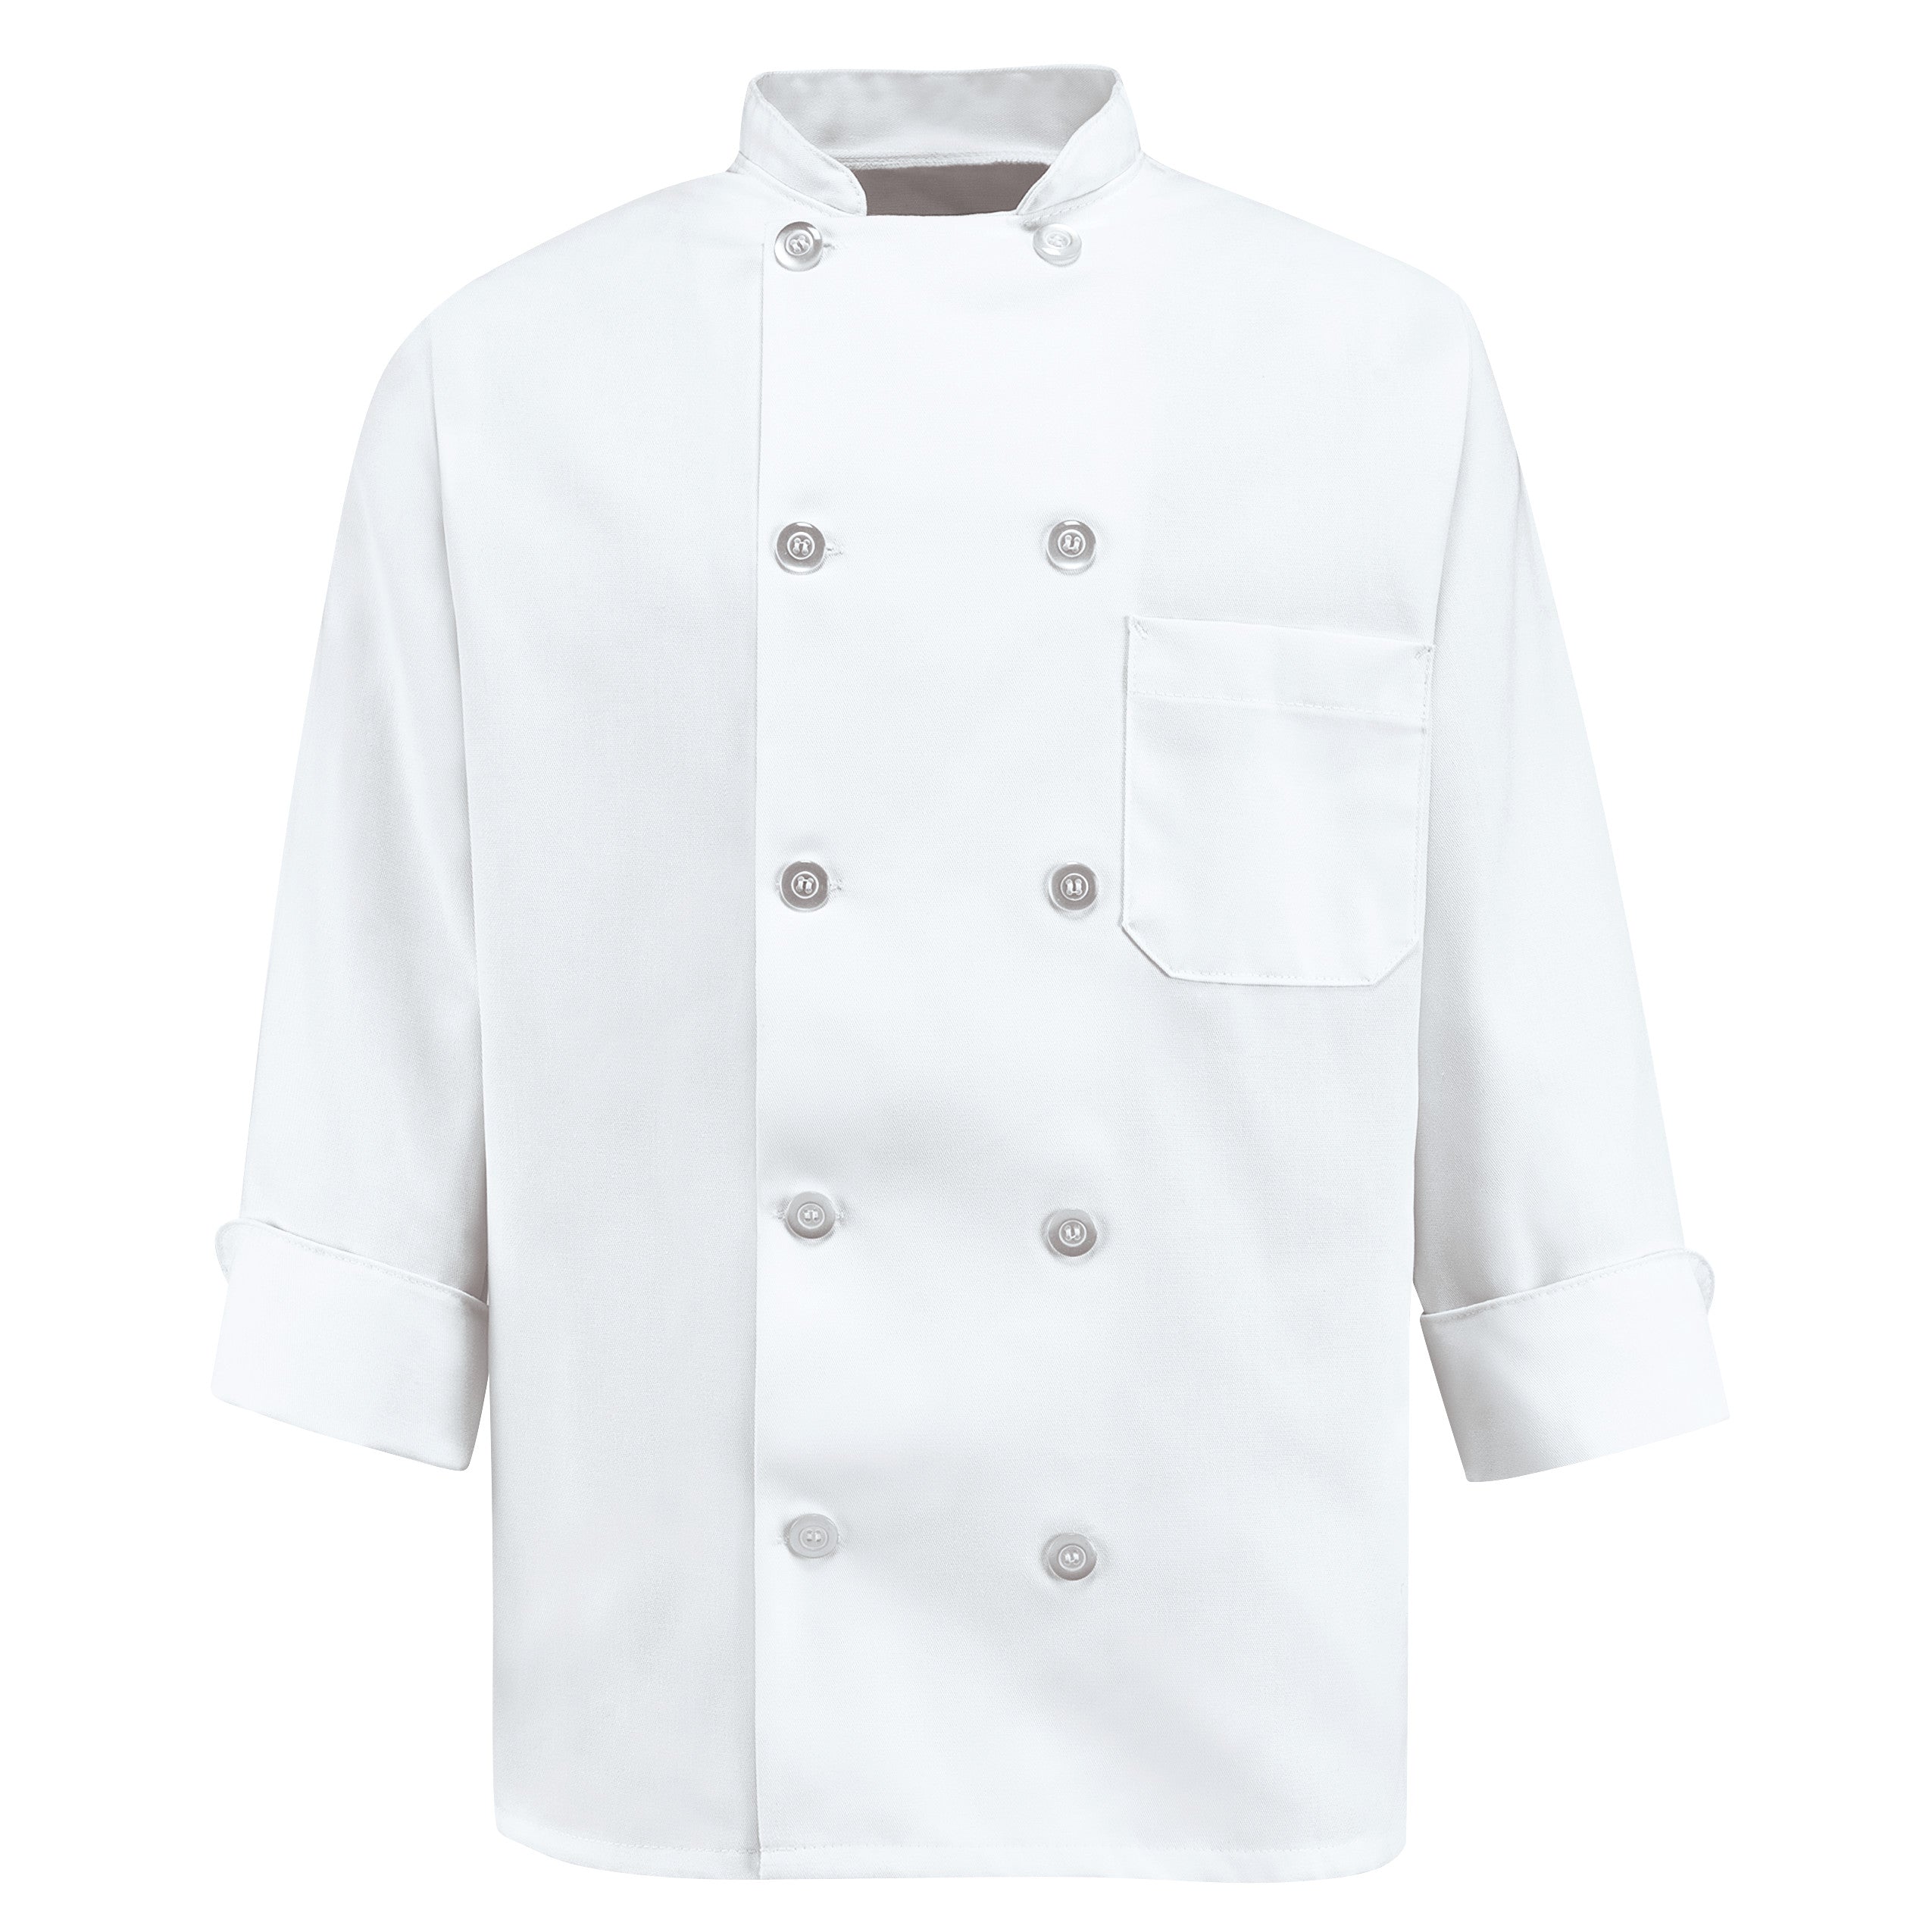 Women's Chef Coat 0401 - White-eSafety Supplies, Inc